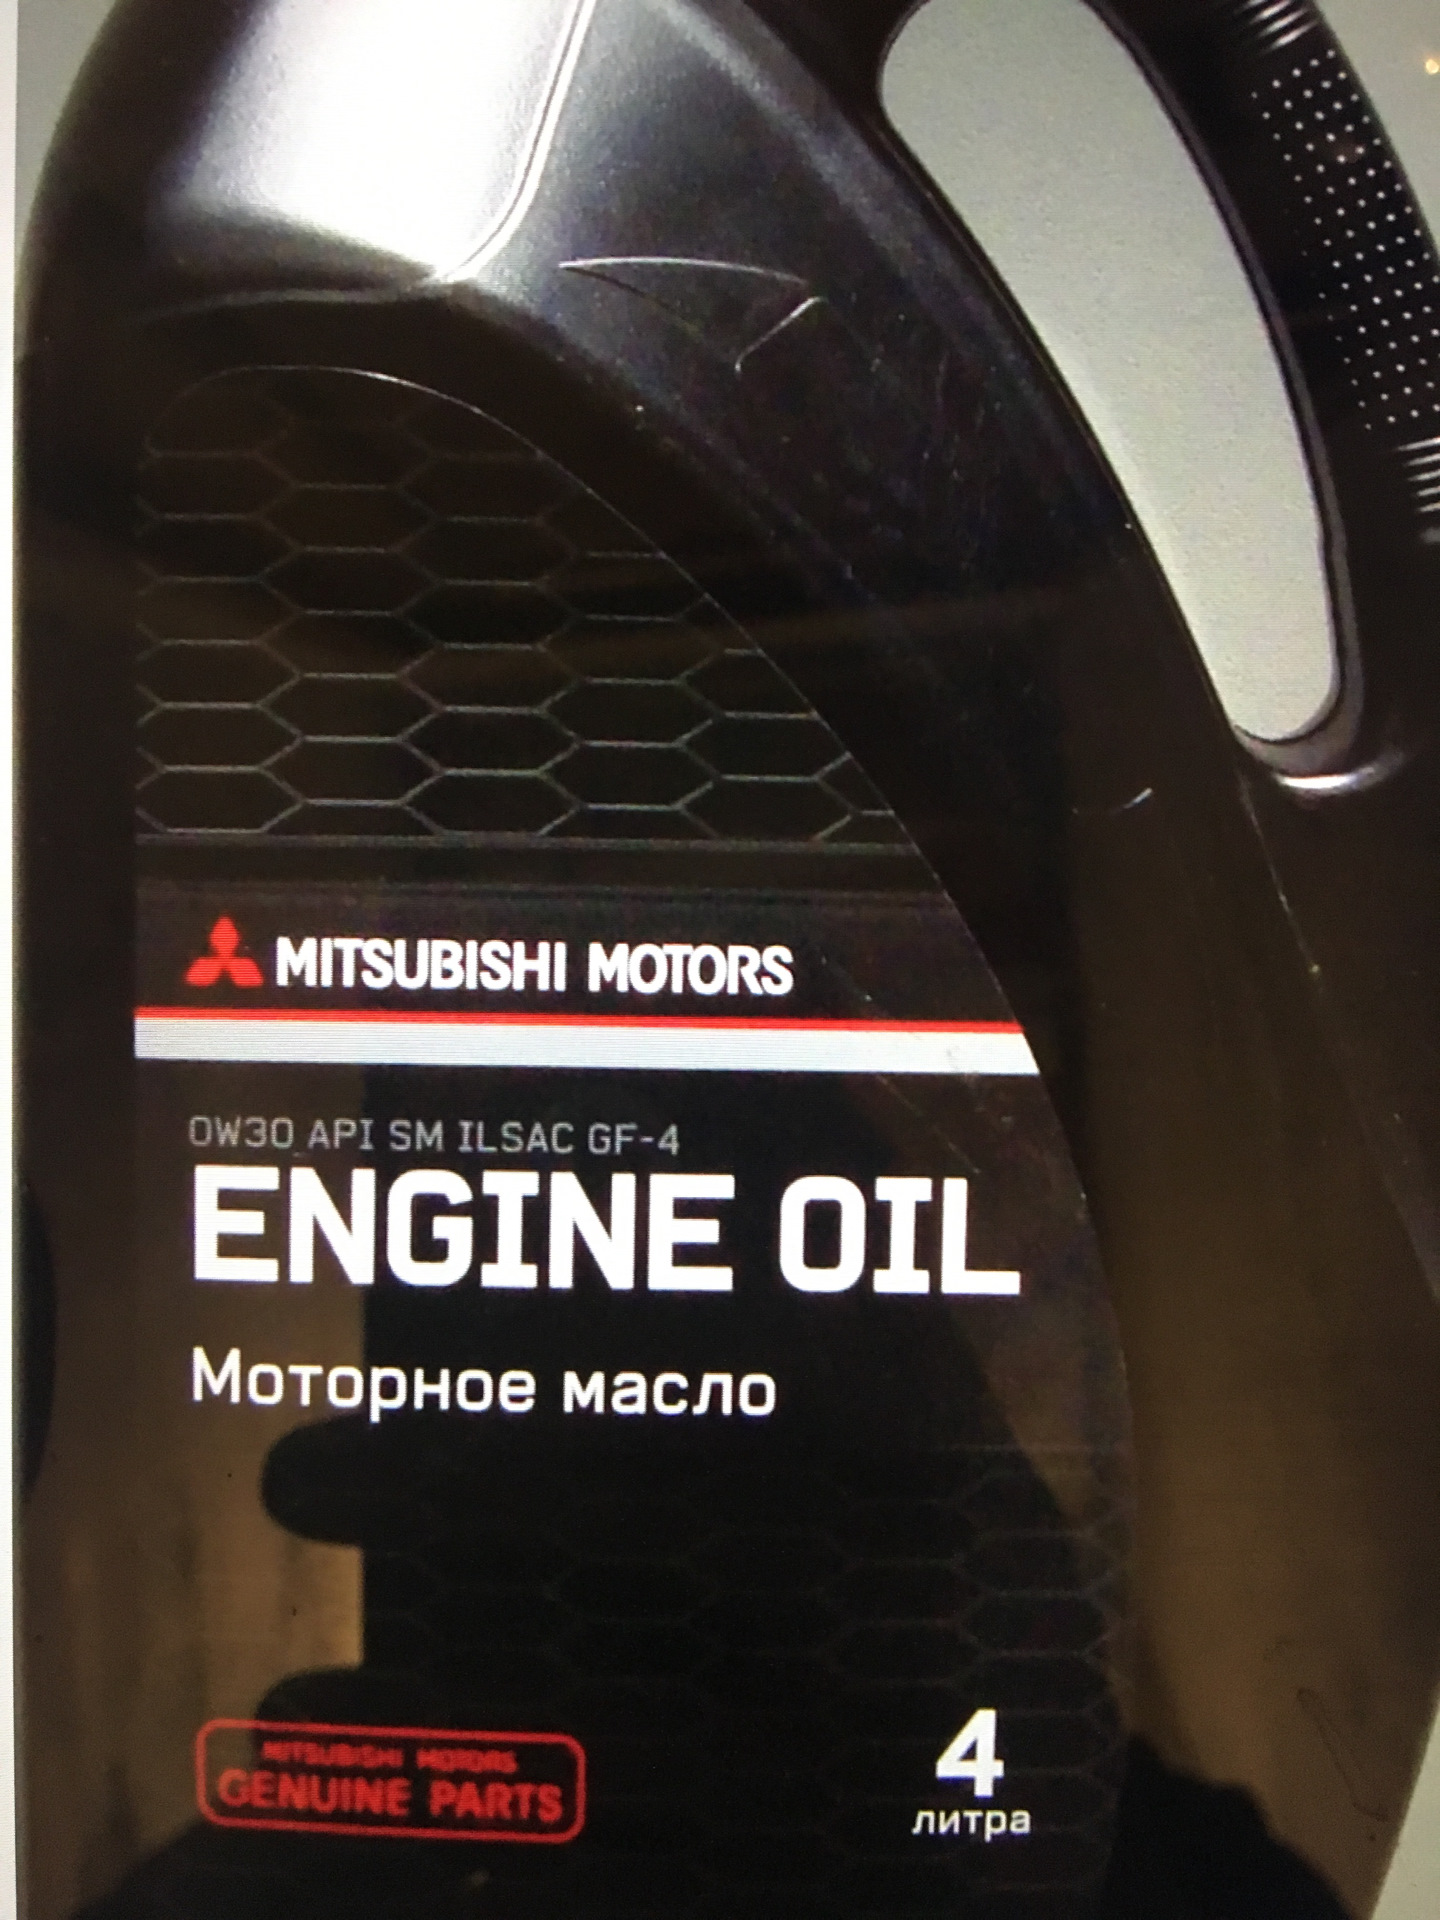 Масло митсубиси лансер 10 1.8. Масло моторное Mitsubishi 0w30. Моторное масло Mitsubishi синтетика 0w30. Моторное масло для Мицубиси Лансер 10. Engine Oil моторное масло Митсубиси 4 литра.